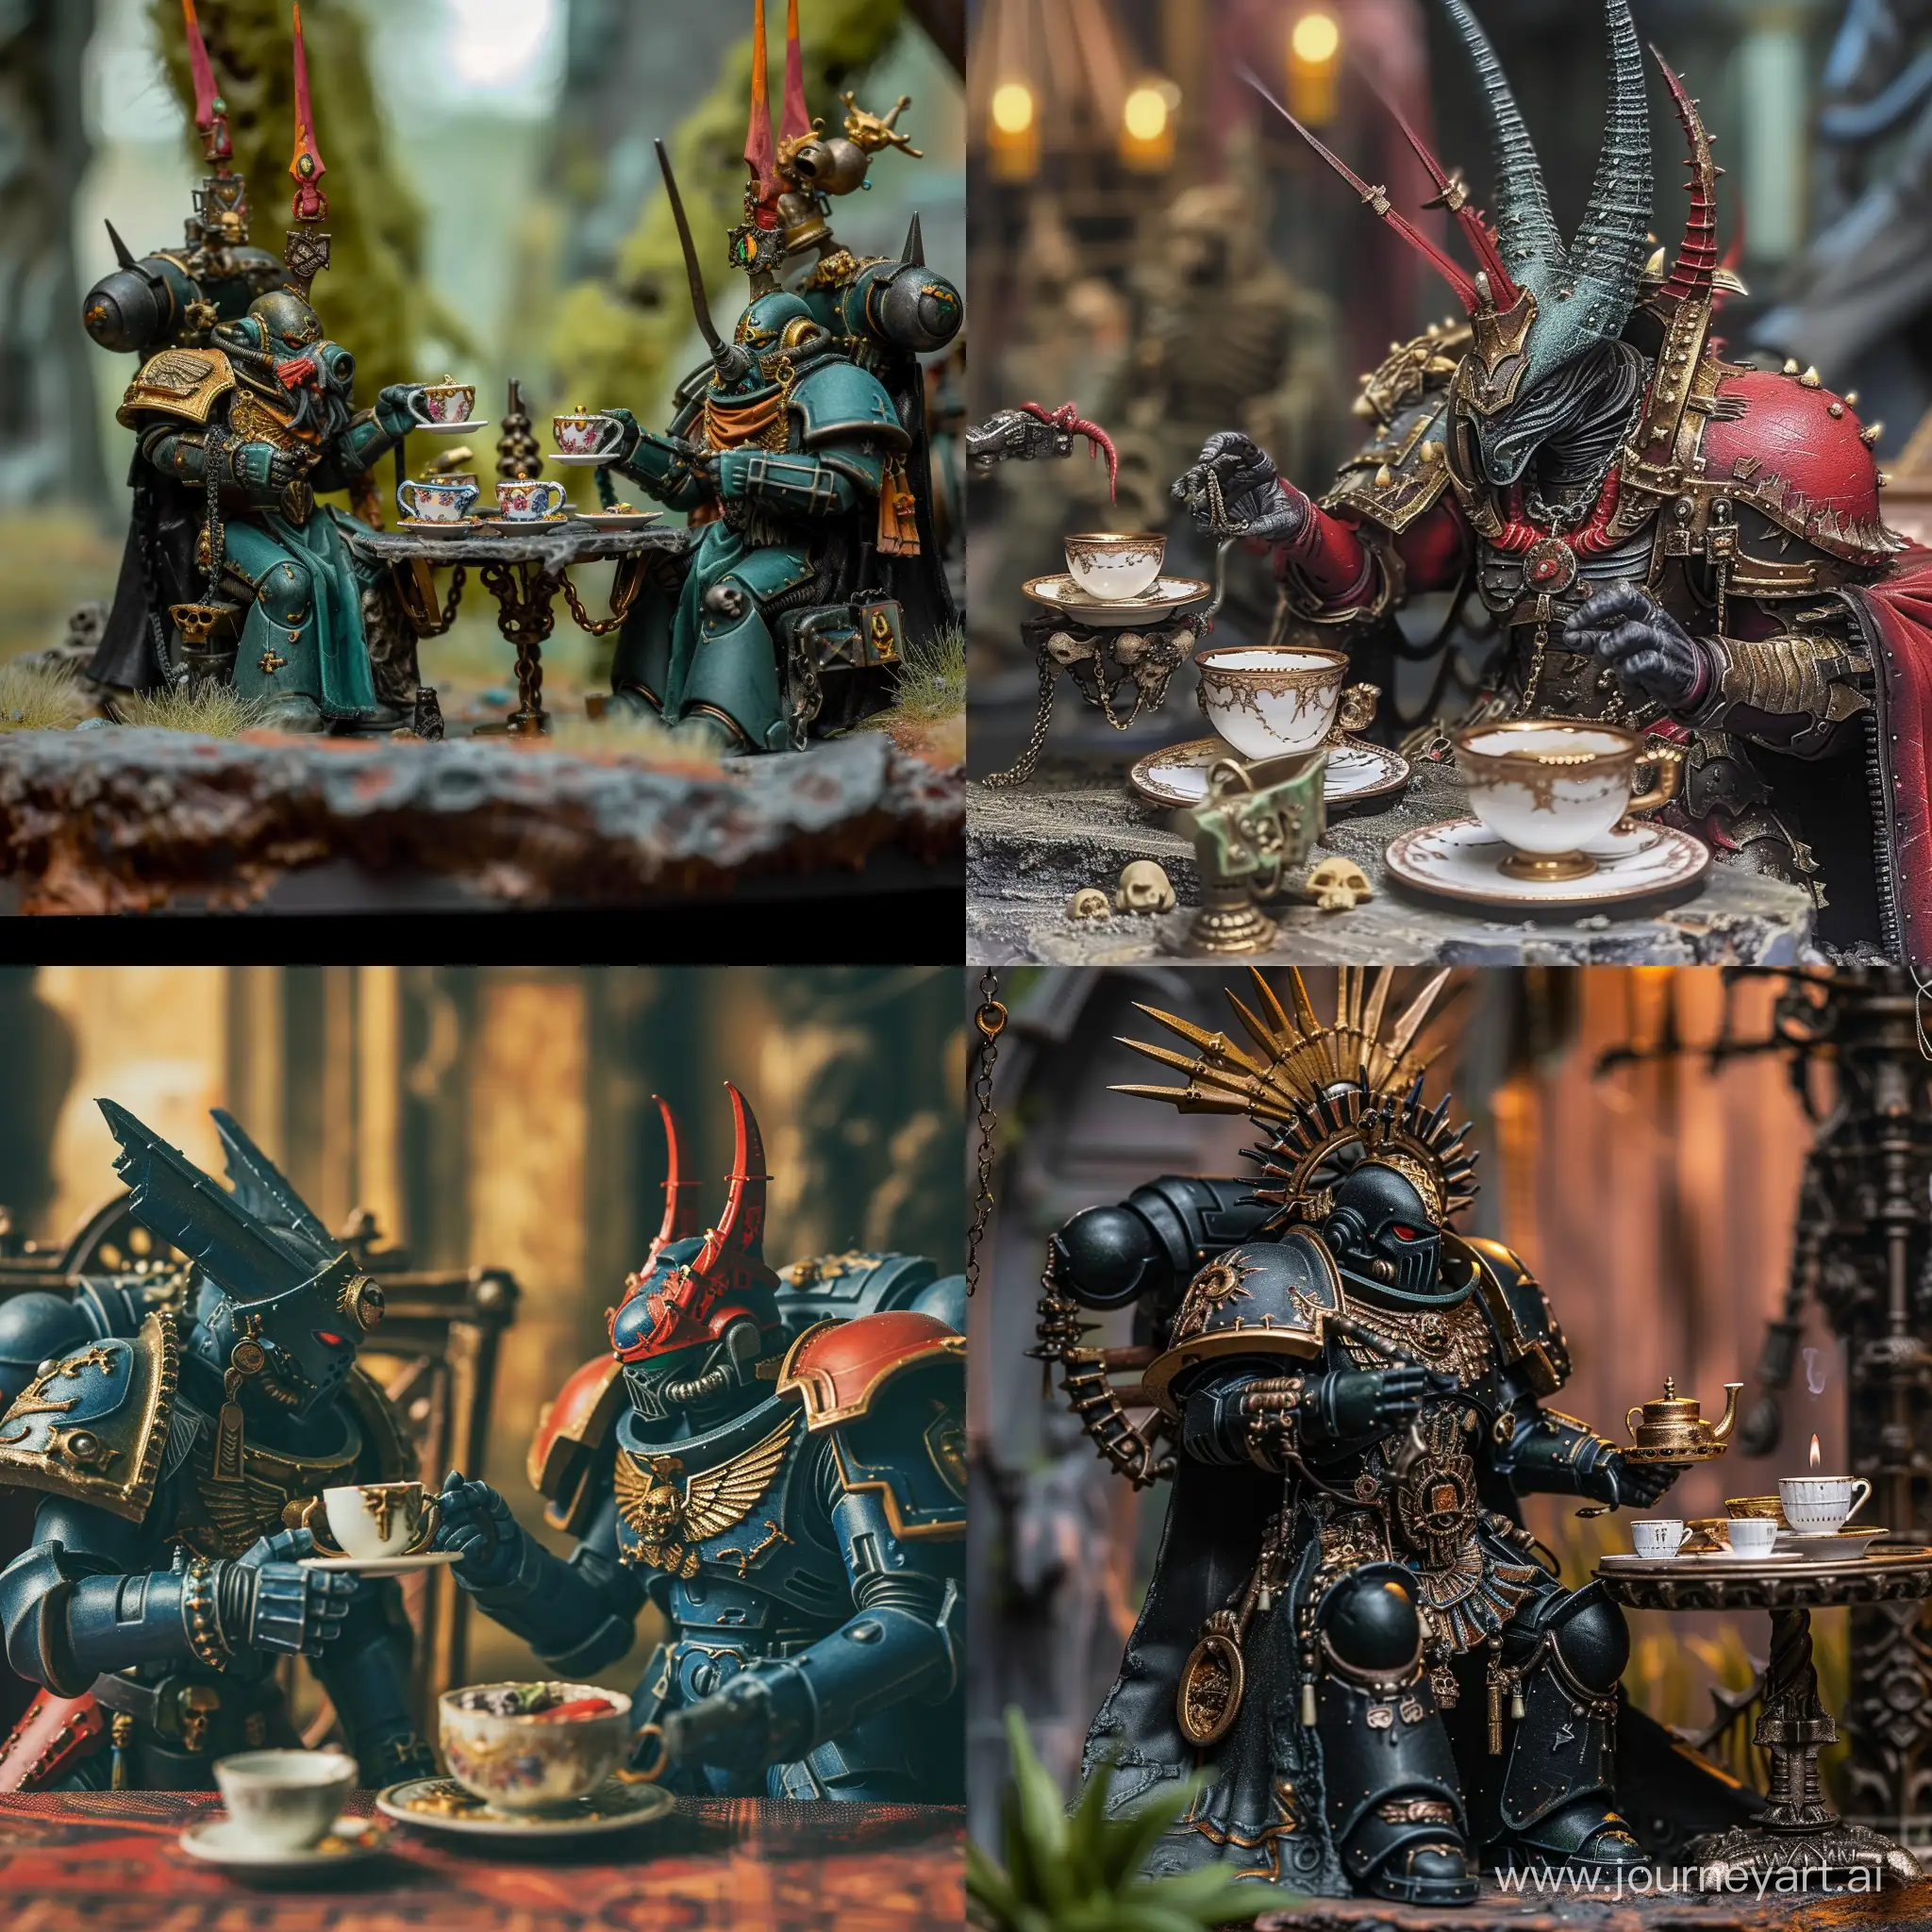 Drukhari-Tea-Party-Elegant-Gathering-of-Dark-Eldar-from-Warhammer-40000